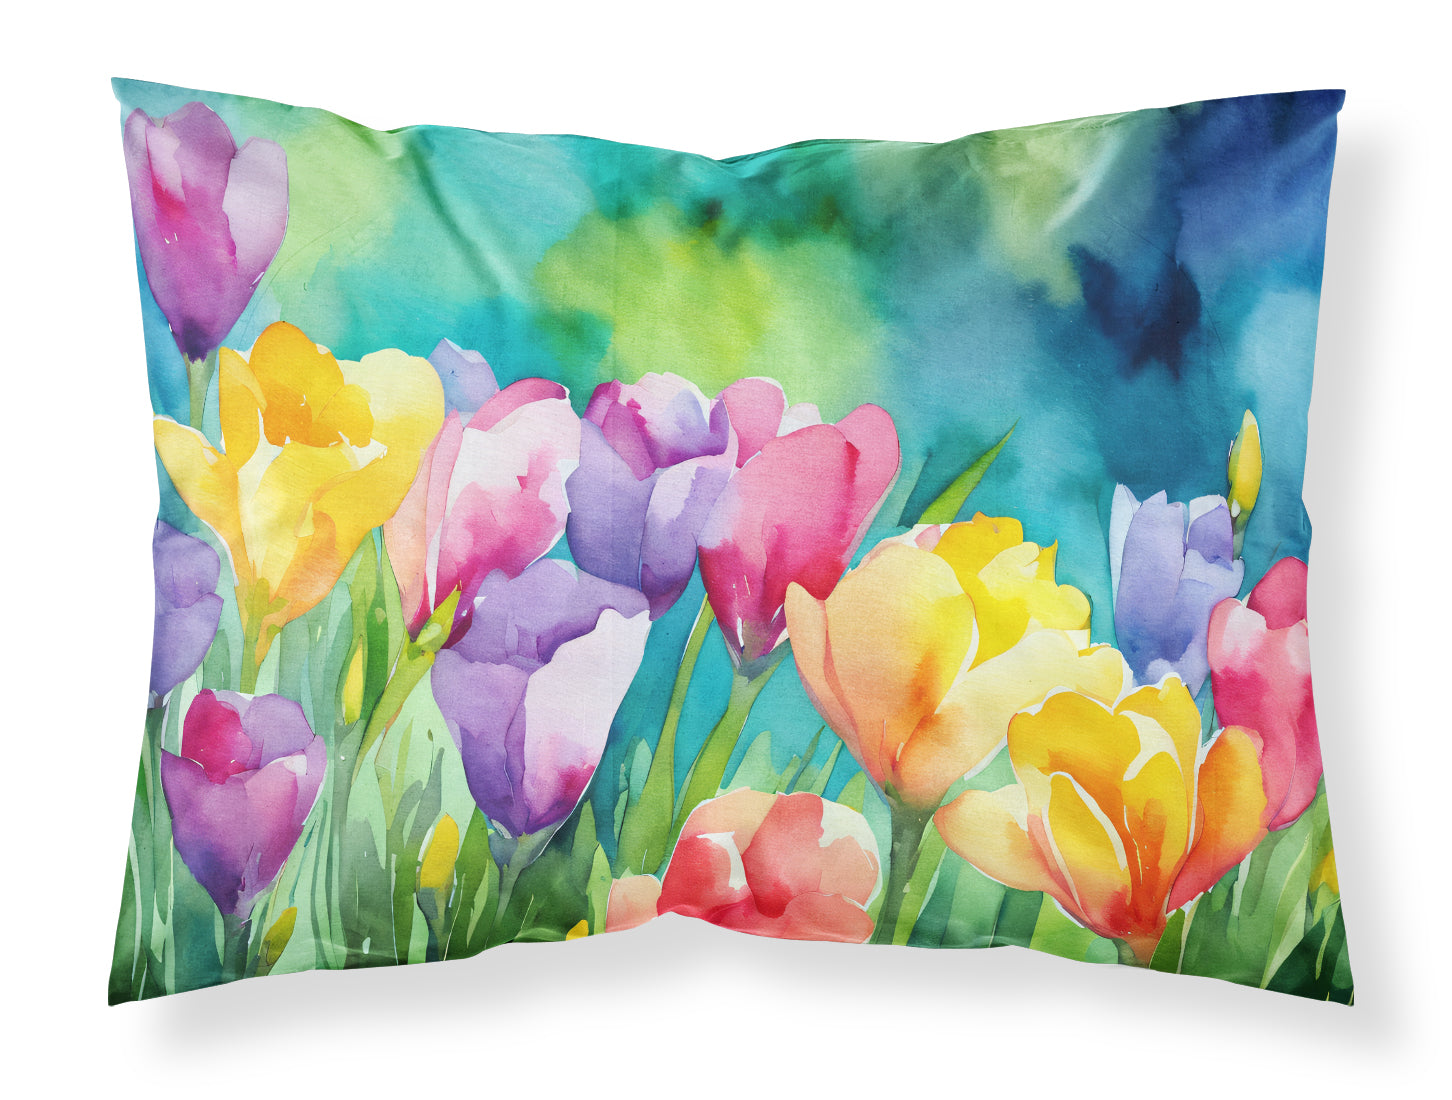 Buy this Freesias in Watercolor Fabric Standard Pillowcase